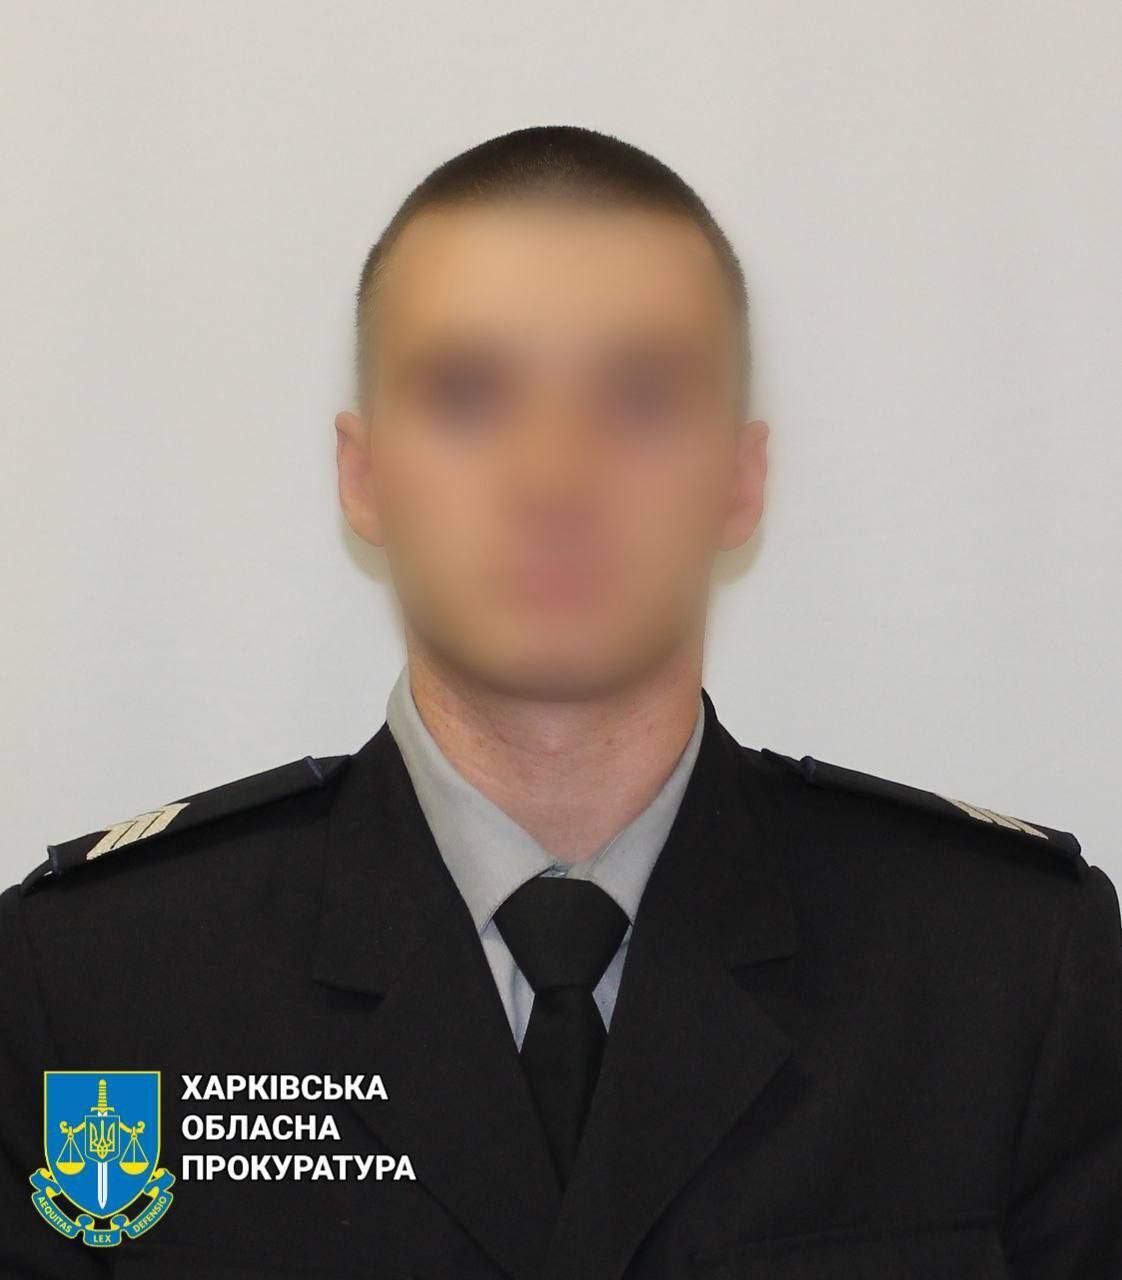 Перешли на сторону врага: в Волчанске двум экс-полицейским объявили о подозрении в госизмене. Фото